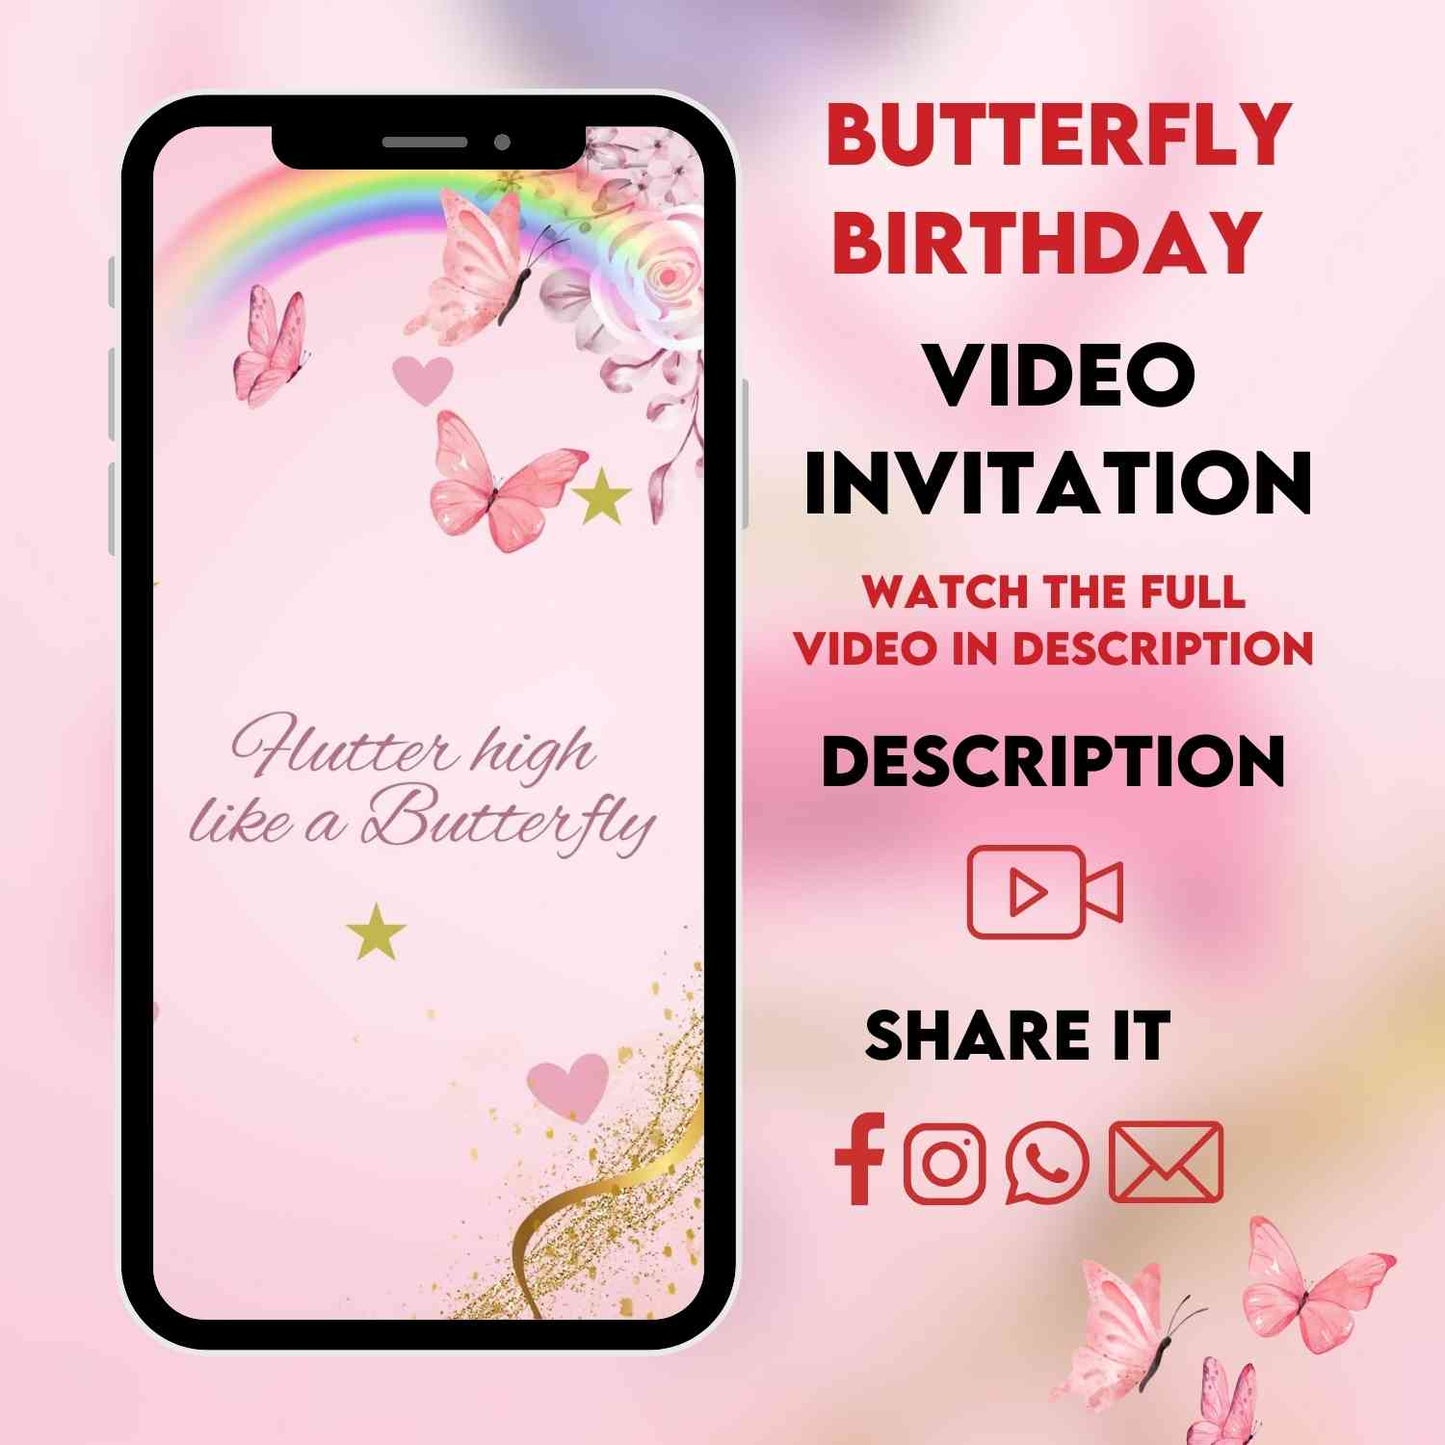 Butterfly Birthday Video Invitation - Girl's Pink Butterfly Birthday Invitation